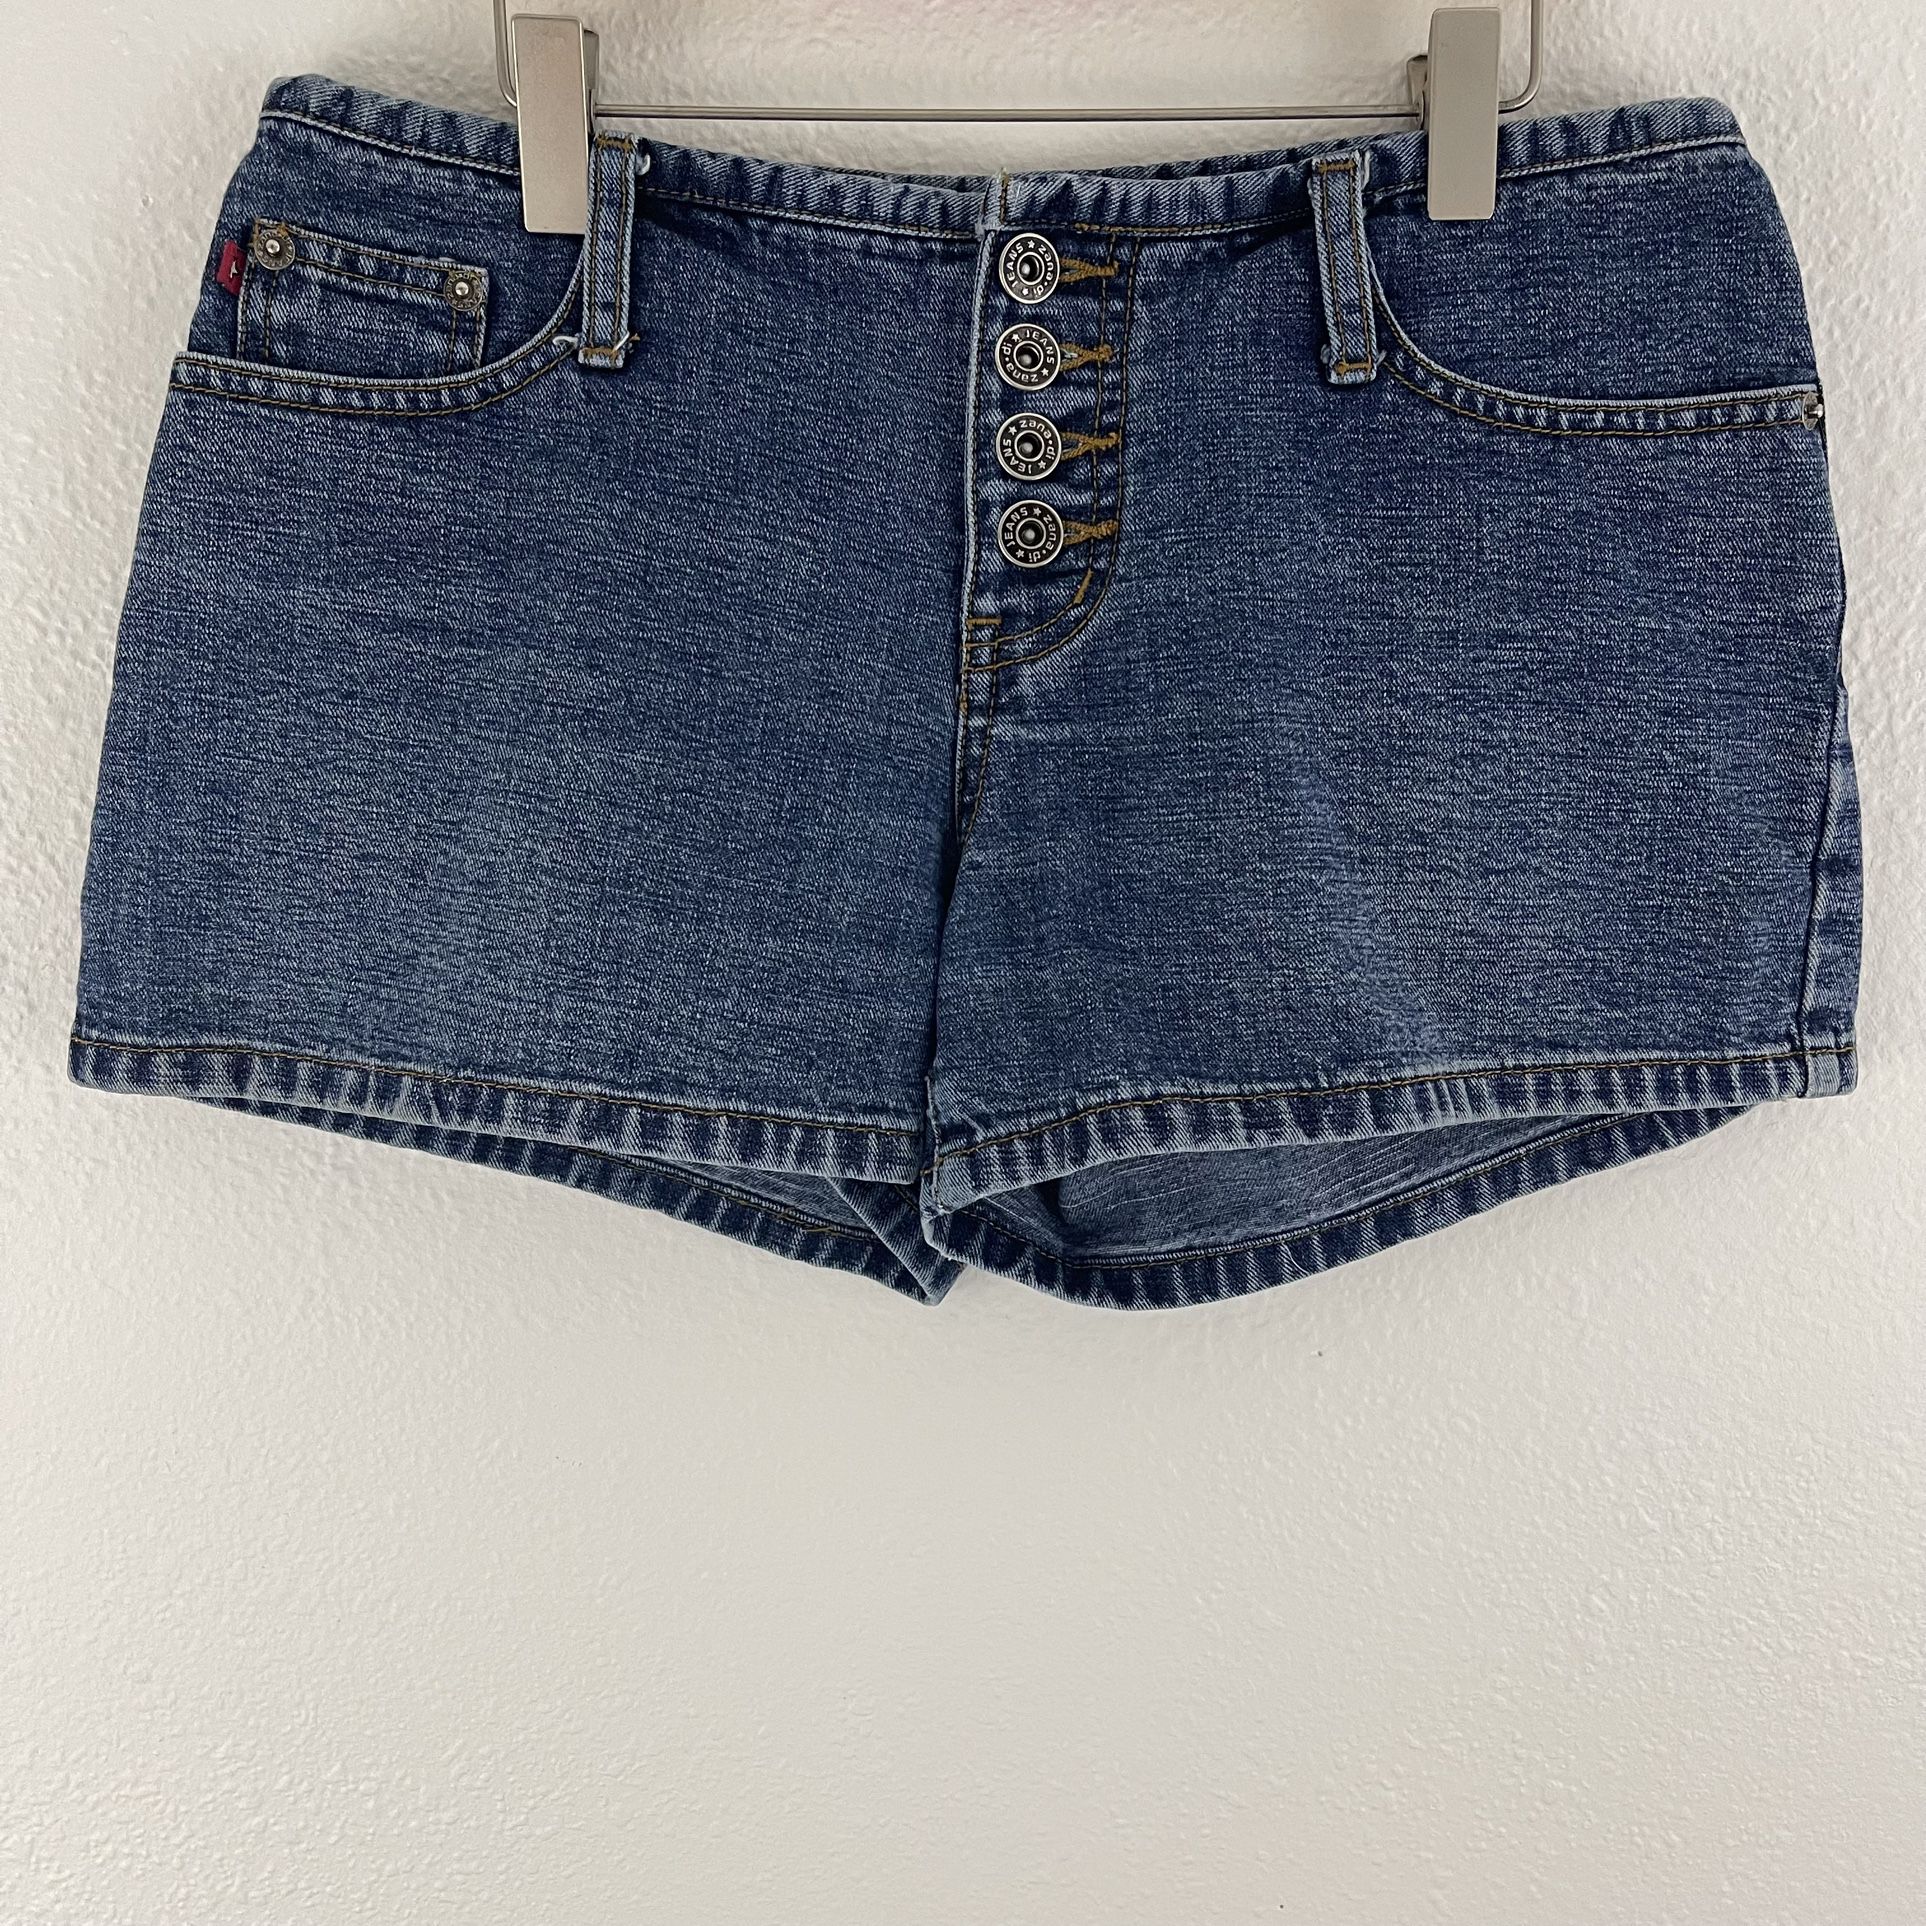 ZANA-DI Vintage Y2K Dark Wash Denim Button Fly Low Rise Summer Jean Short Shorts